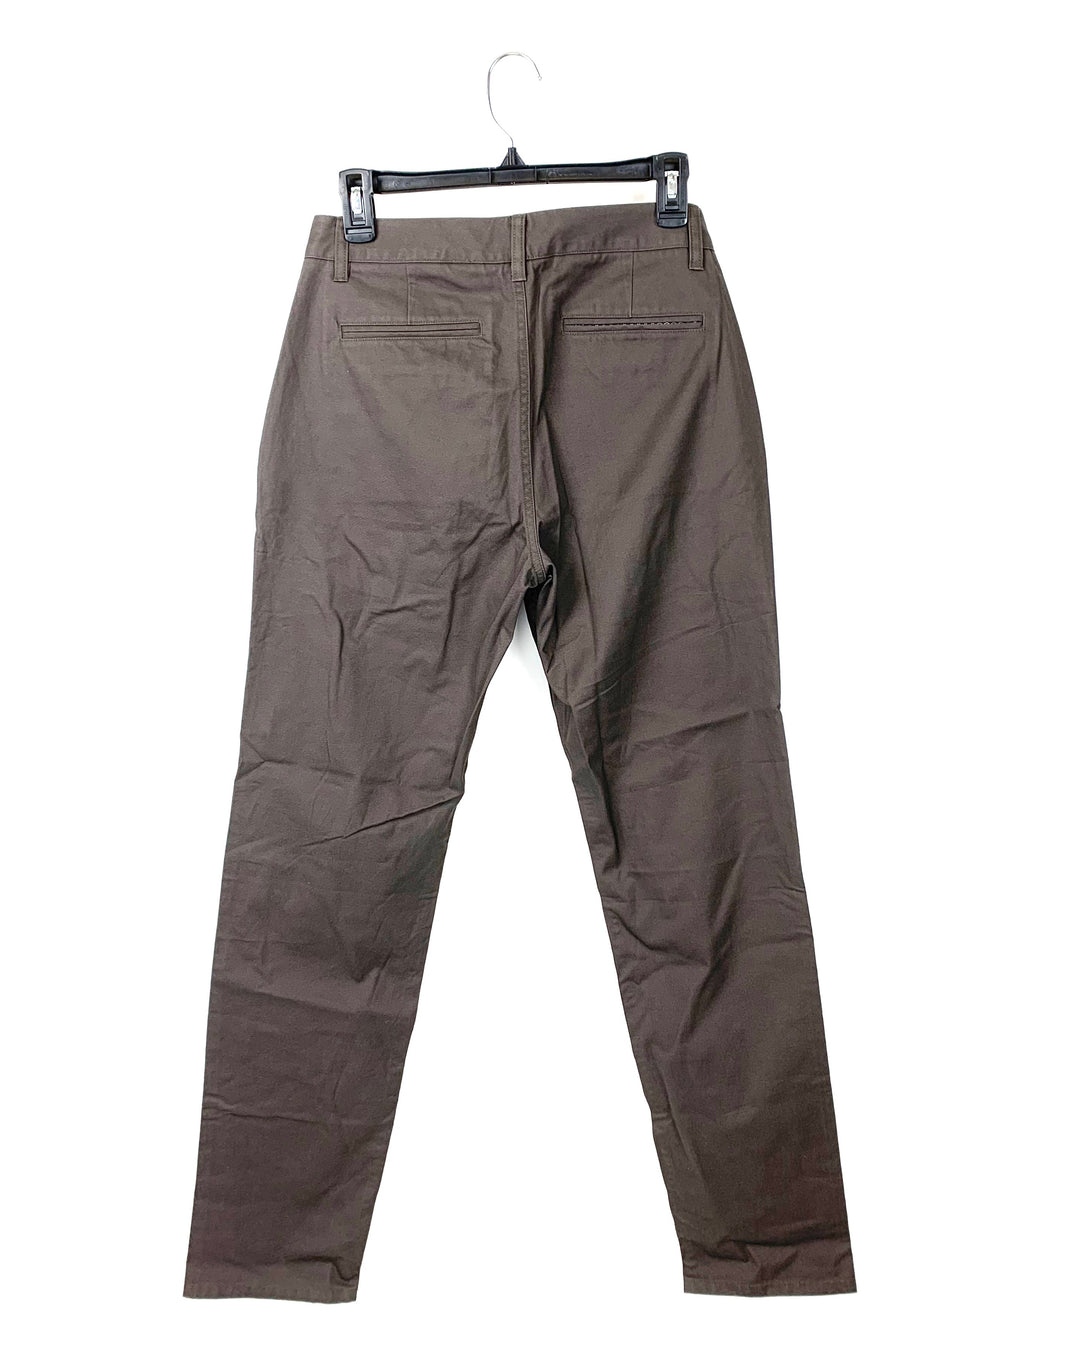 MENS Brown Pants - Size 28/32, 29/32 40/32,